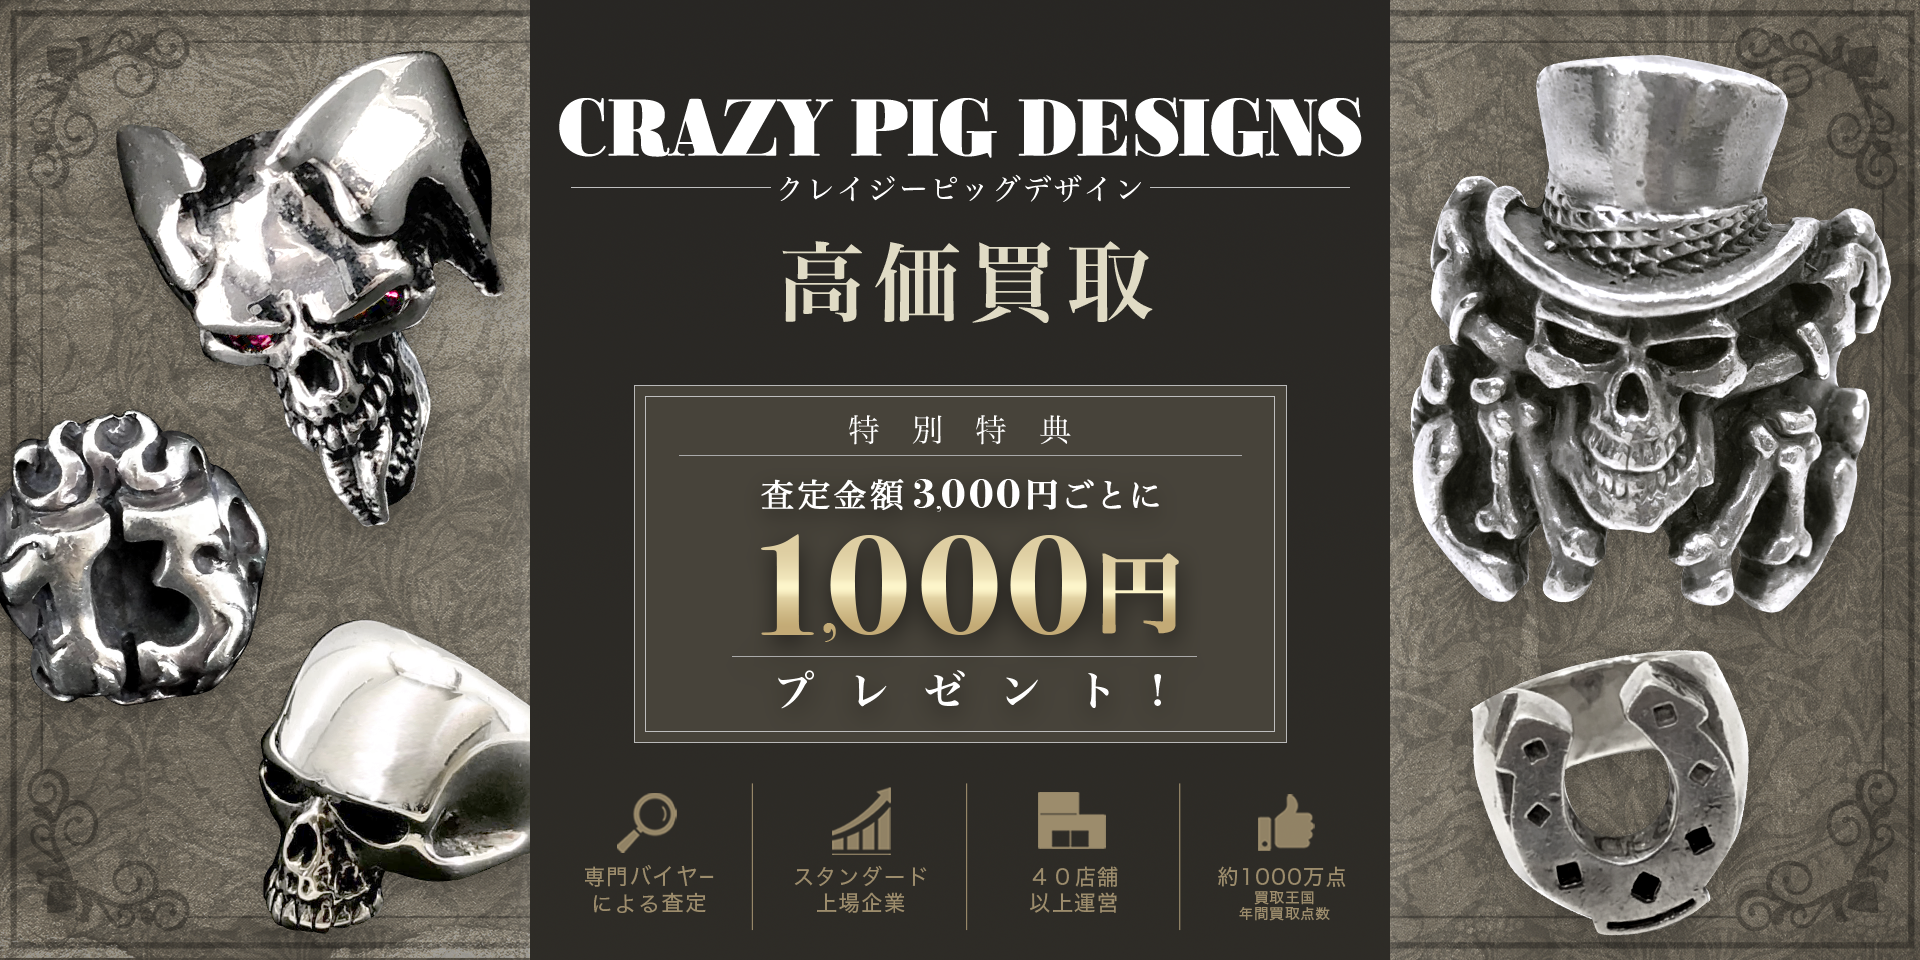 Crazy Pig Designsのキービジュアル